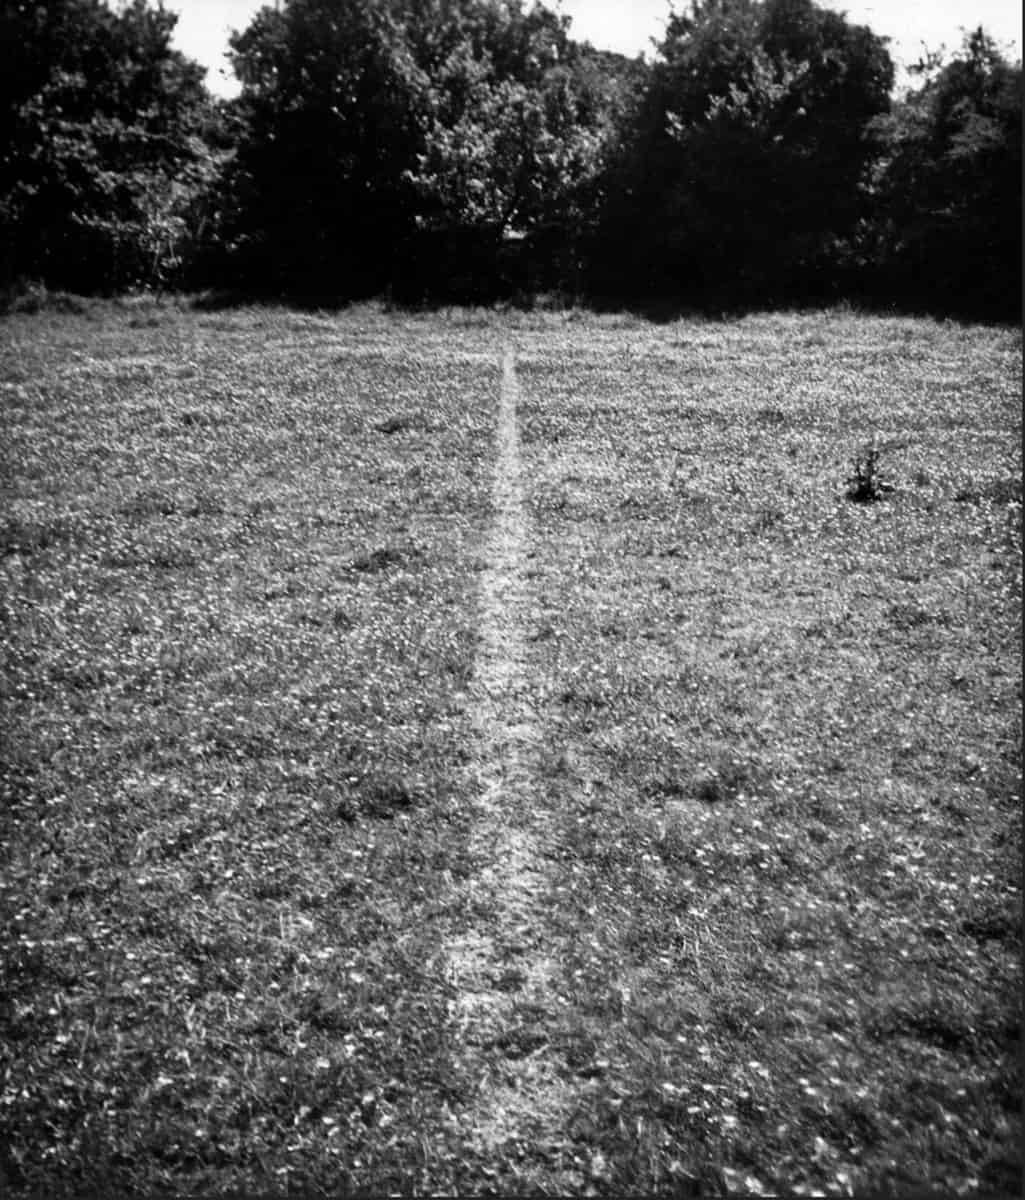 A Line Made by Walking, 1967, British artist Richard Long